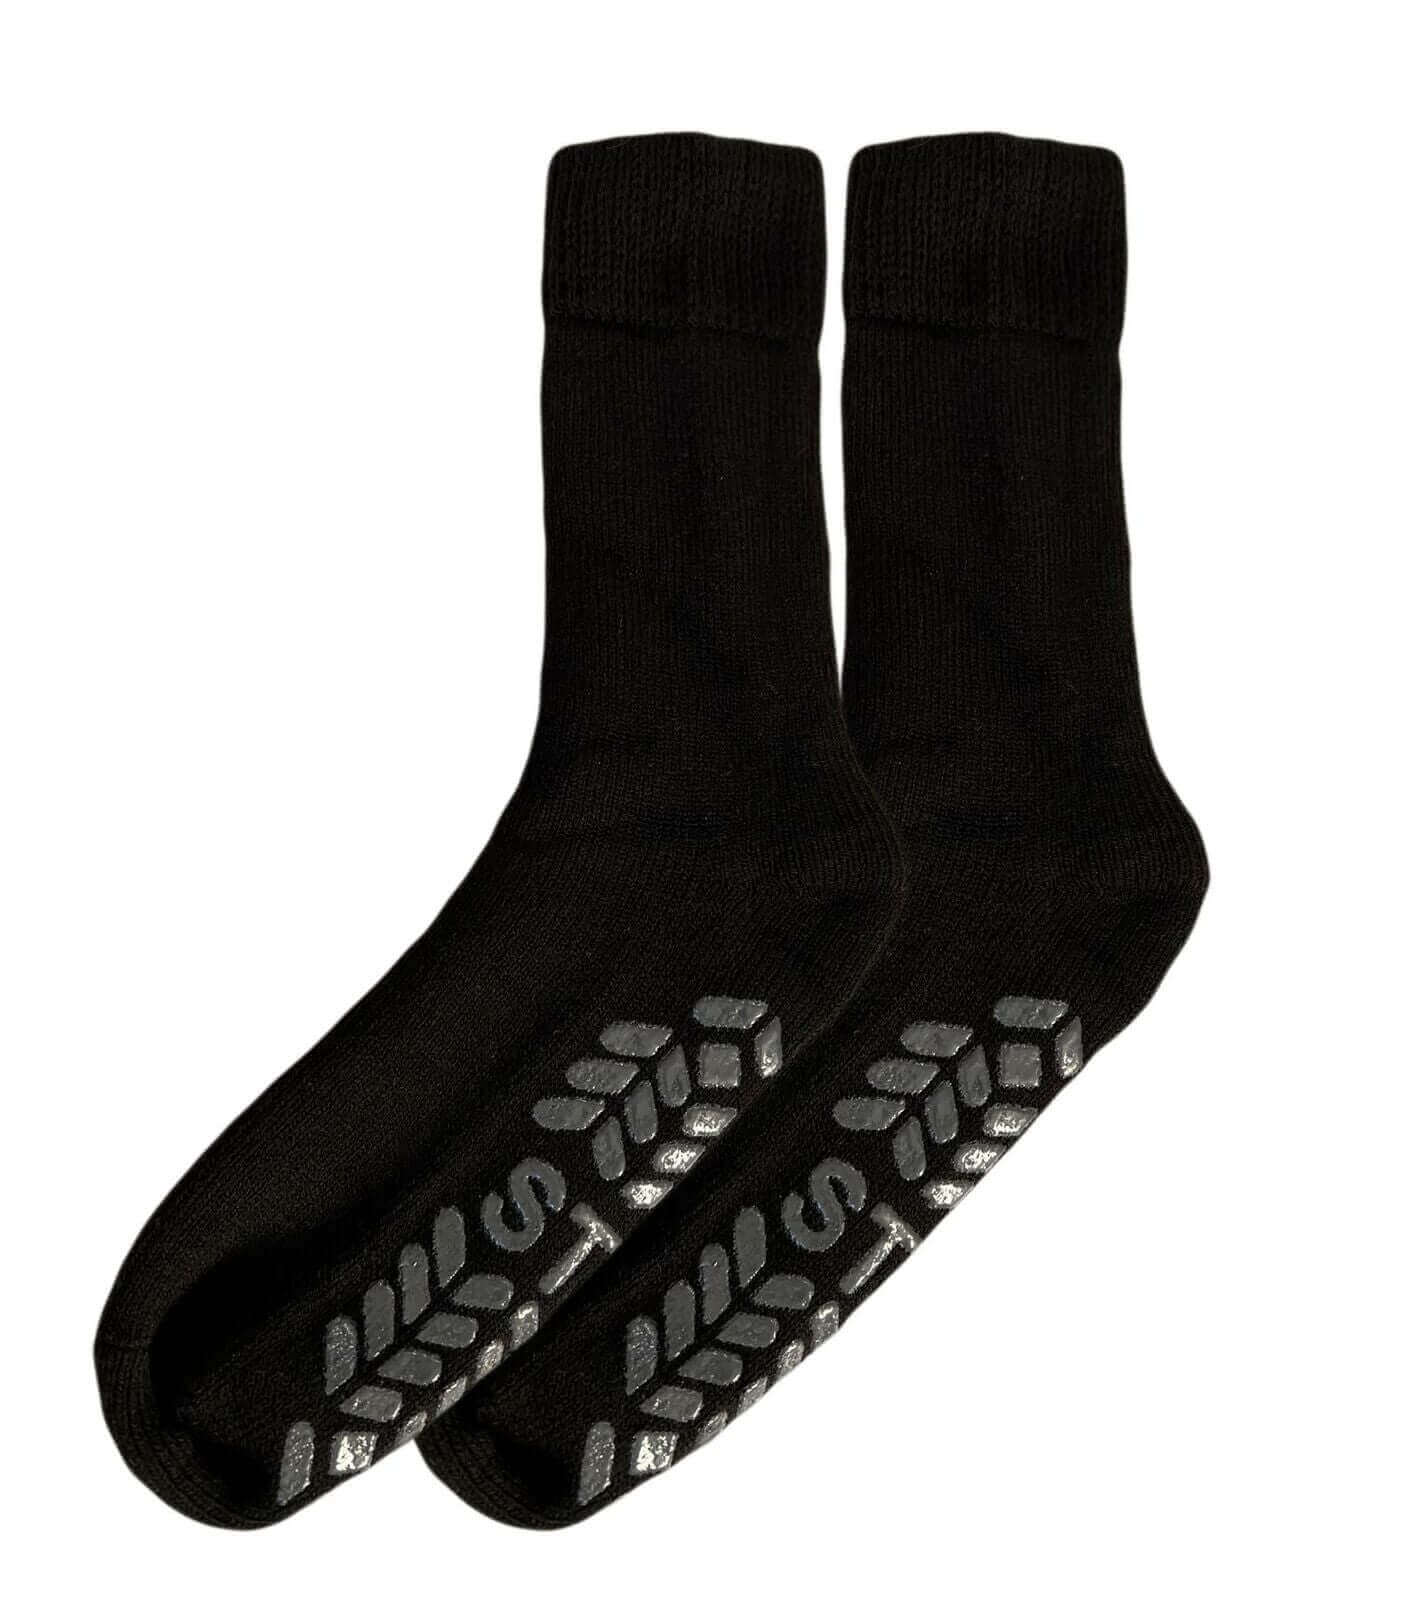 3 Pairs Of Men's Slipper Socks, Thermal Lounge Socks With Non Slip Soles. Buy now for £7.00. A Socks by Sock Stack. 6-11, acrylic, assorted, black, boot socks, boys, breathable, clothing, comfortable, cosy, dress socks, elastane, footwear, grey, mens, men